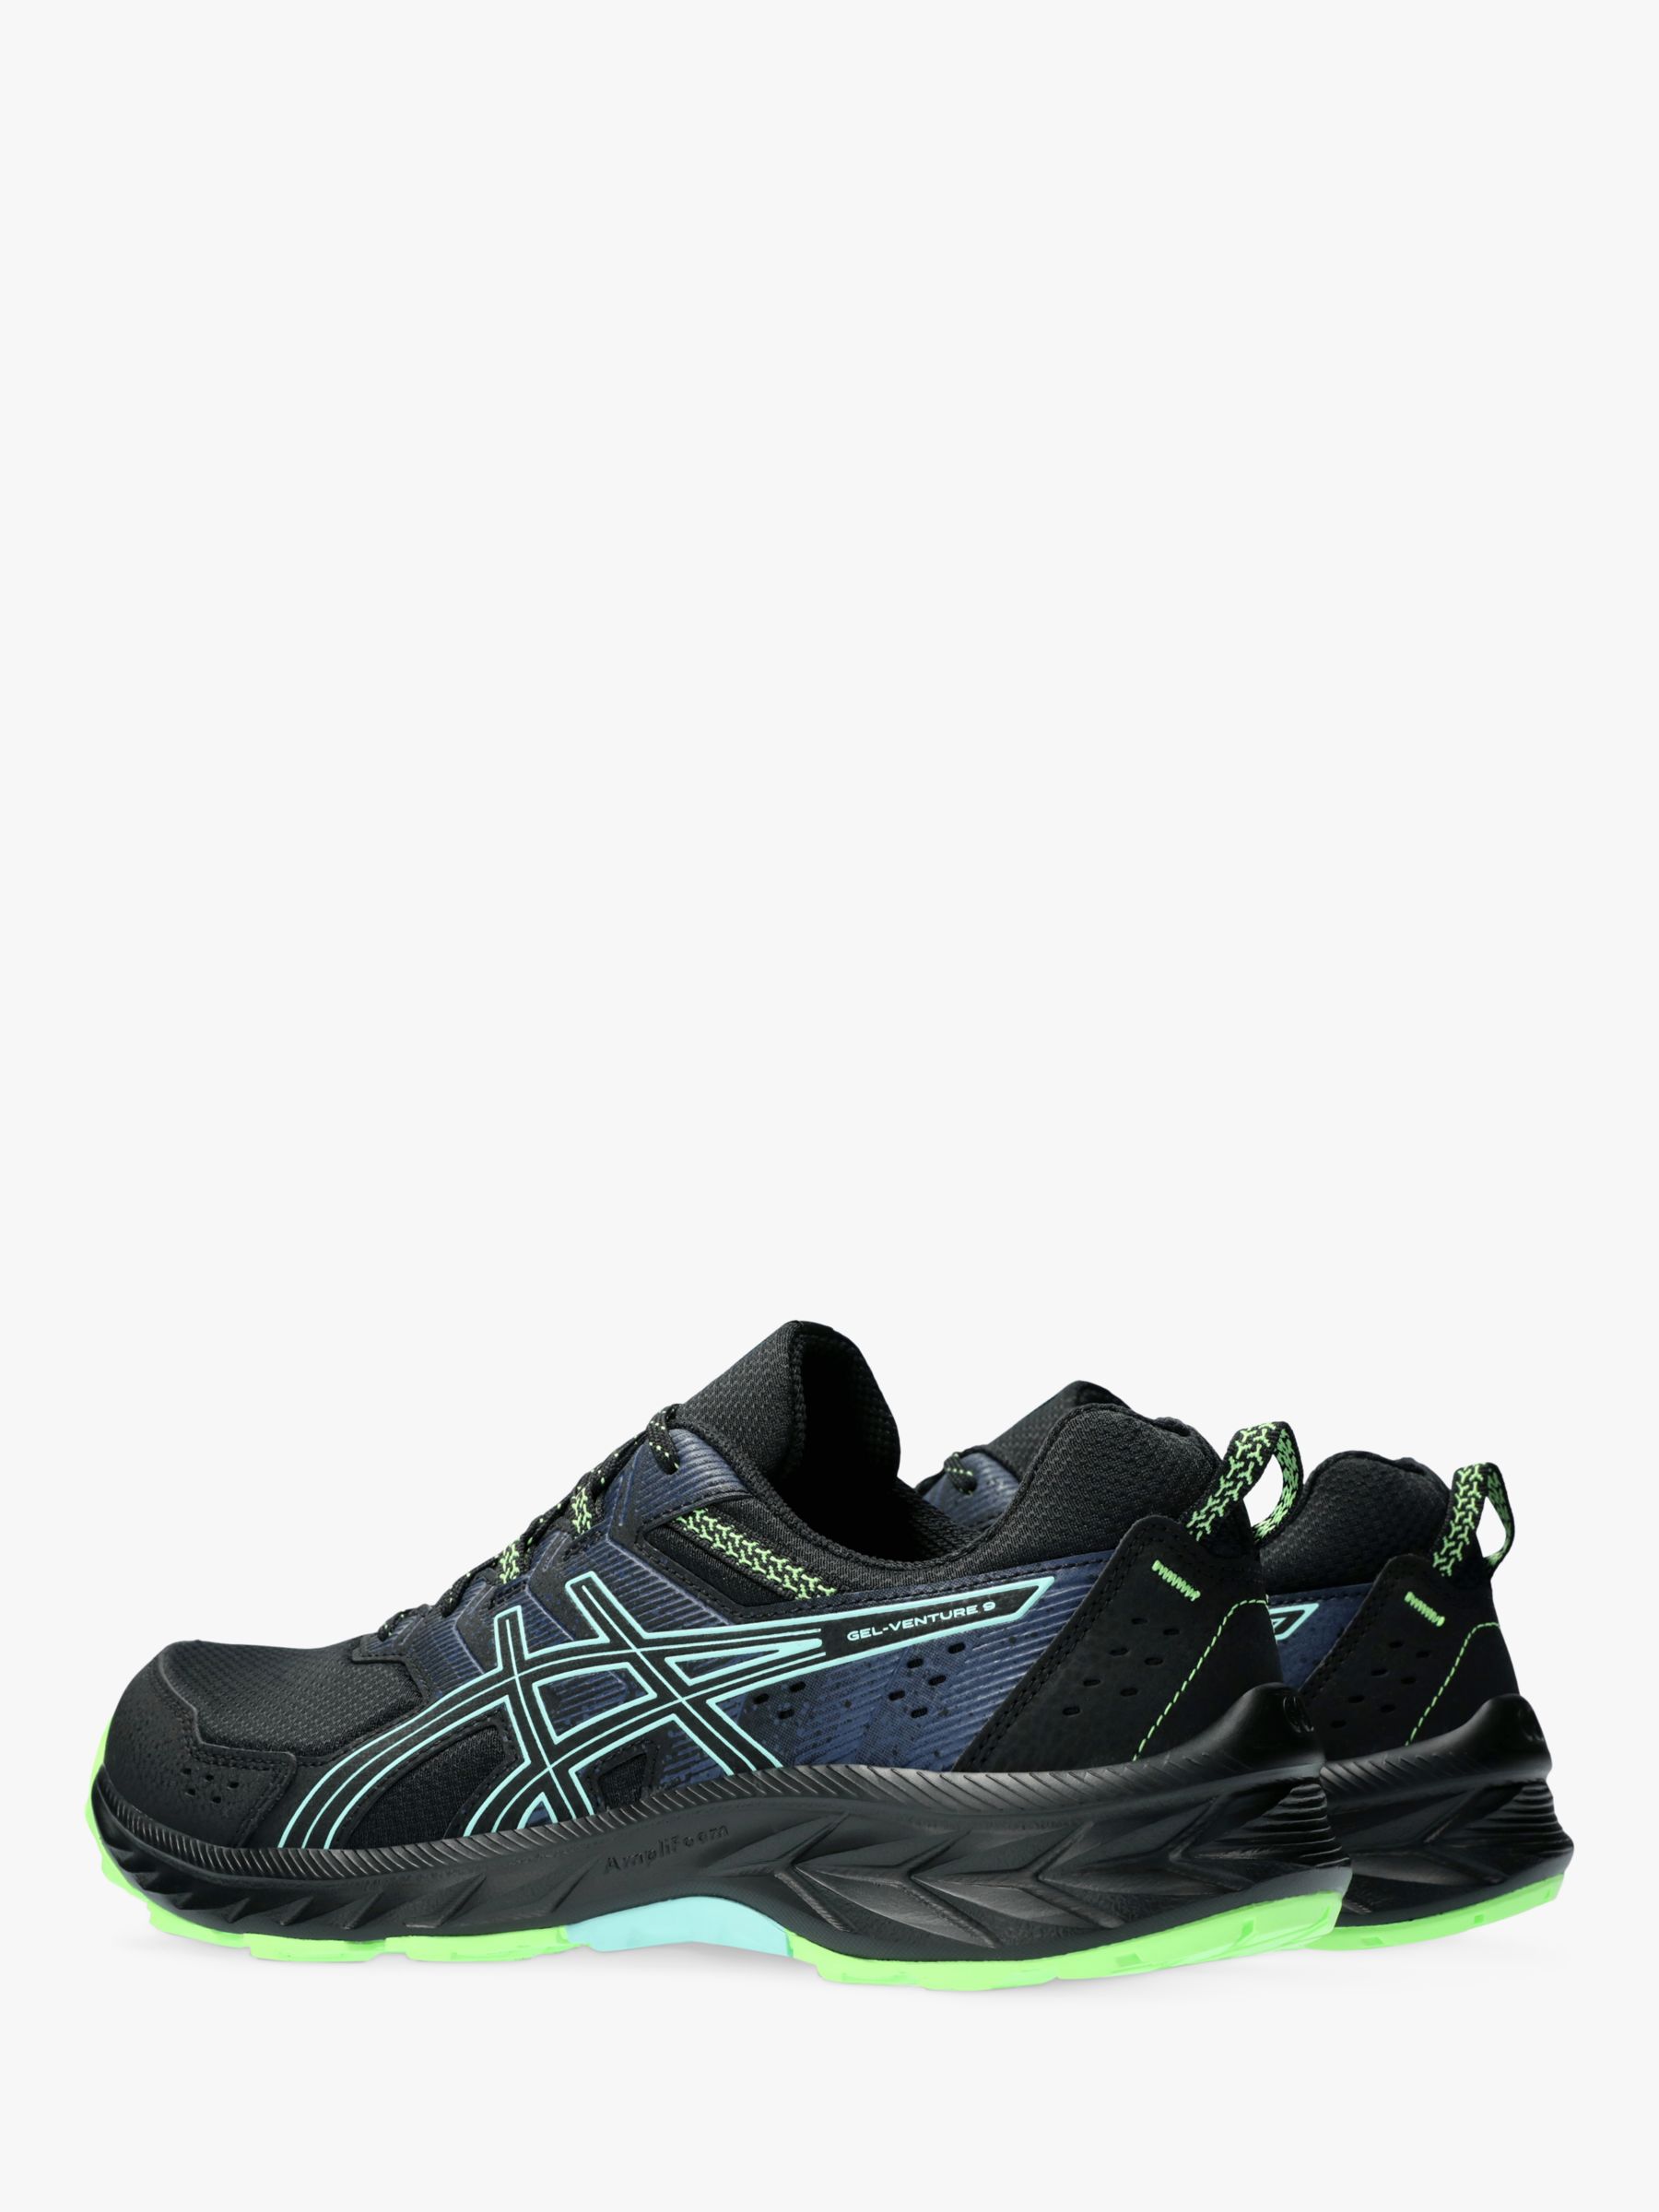 ASICS GEL-VENTURE 9 Men's Running Shoes, Black/Mint, 7